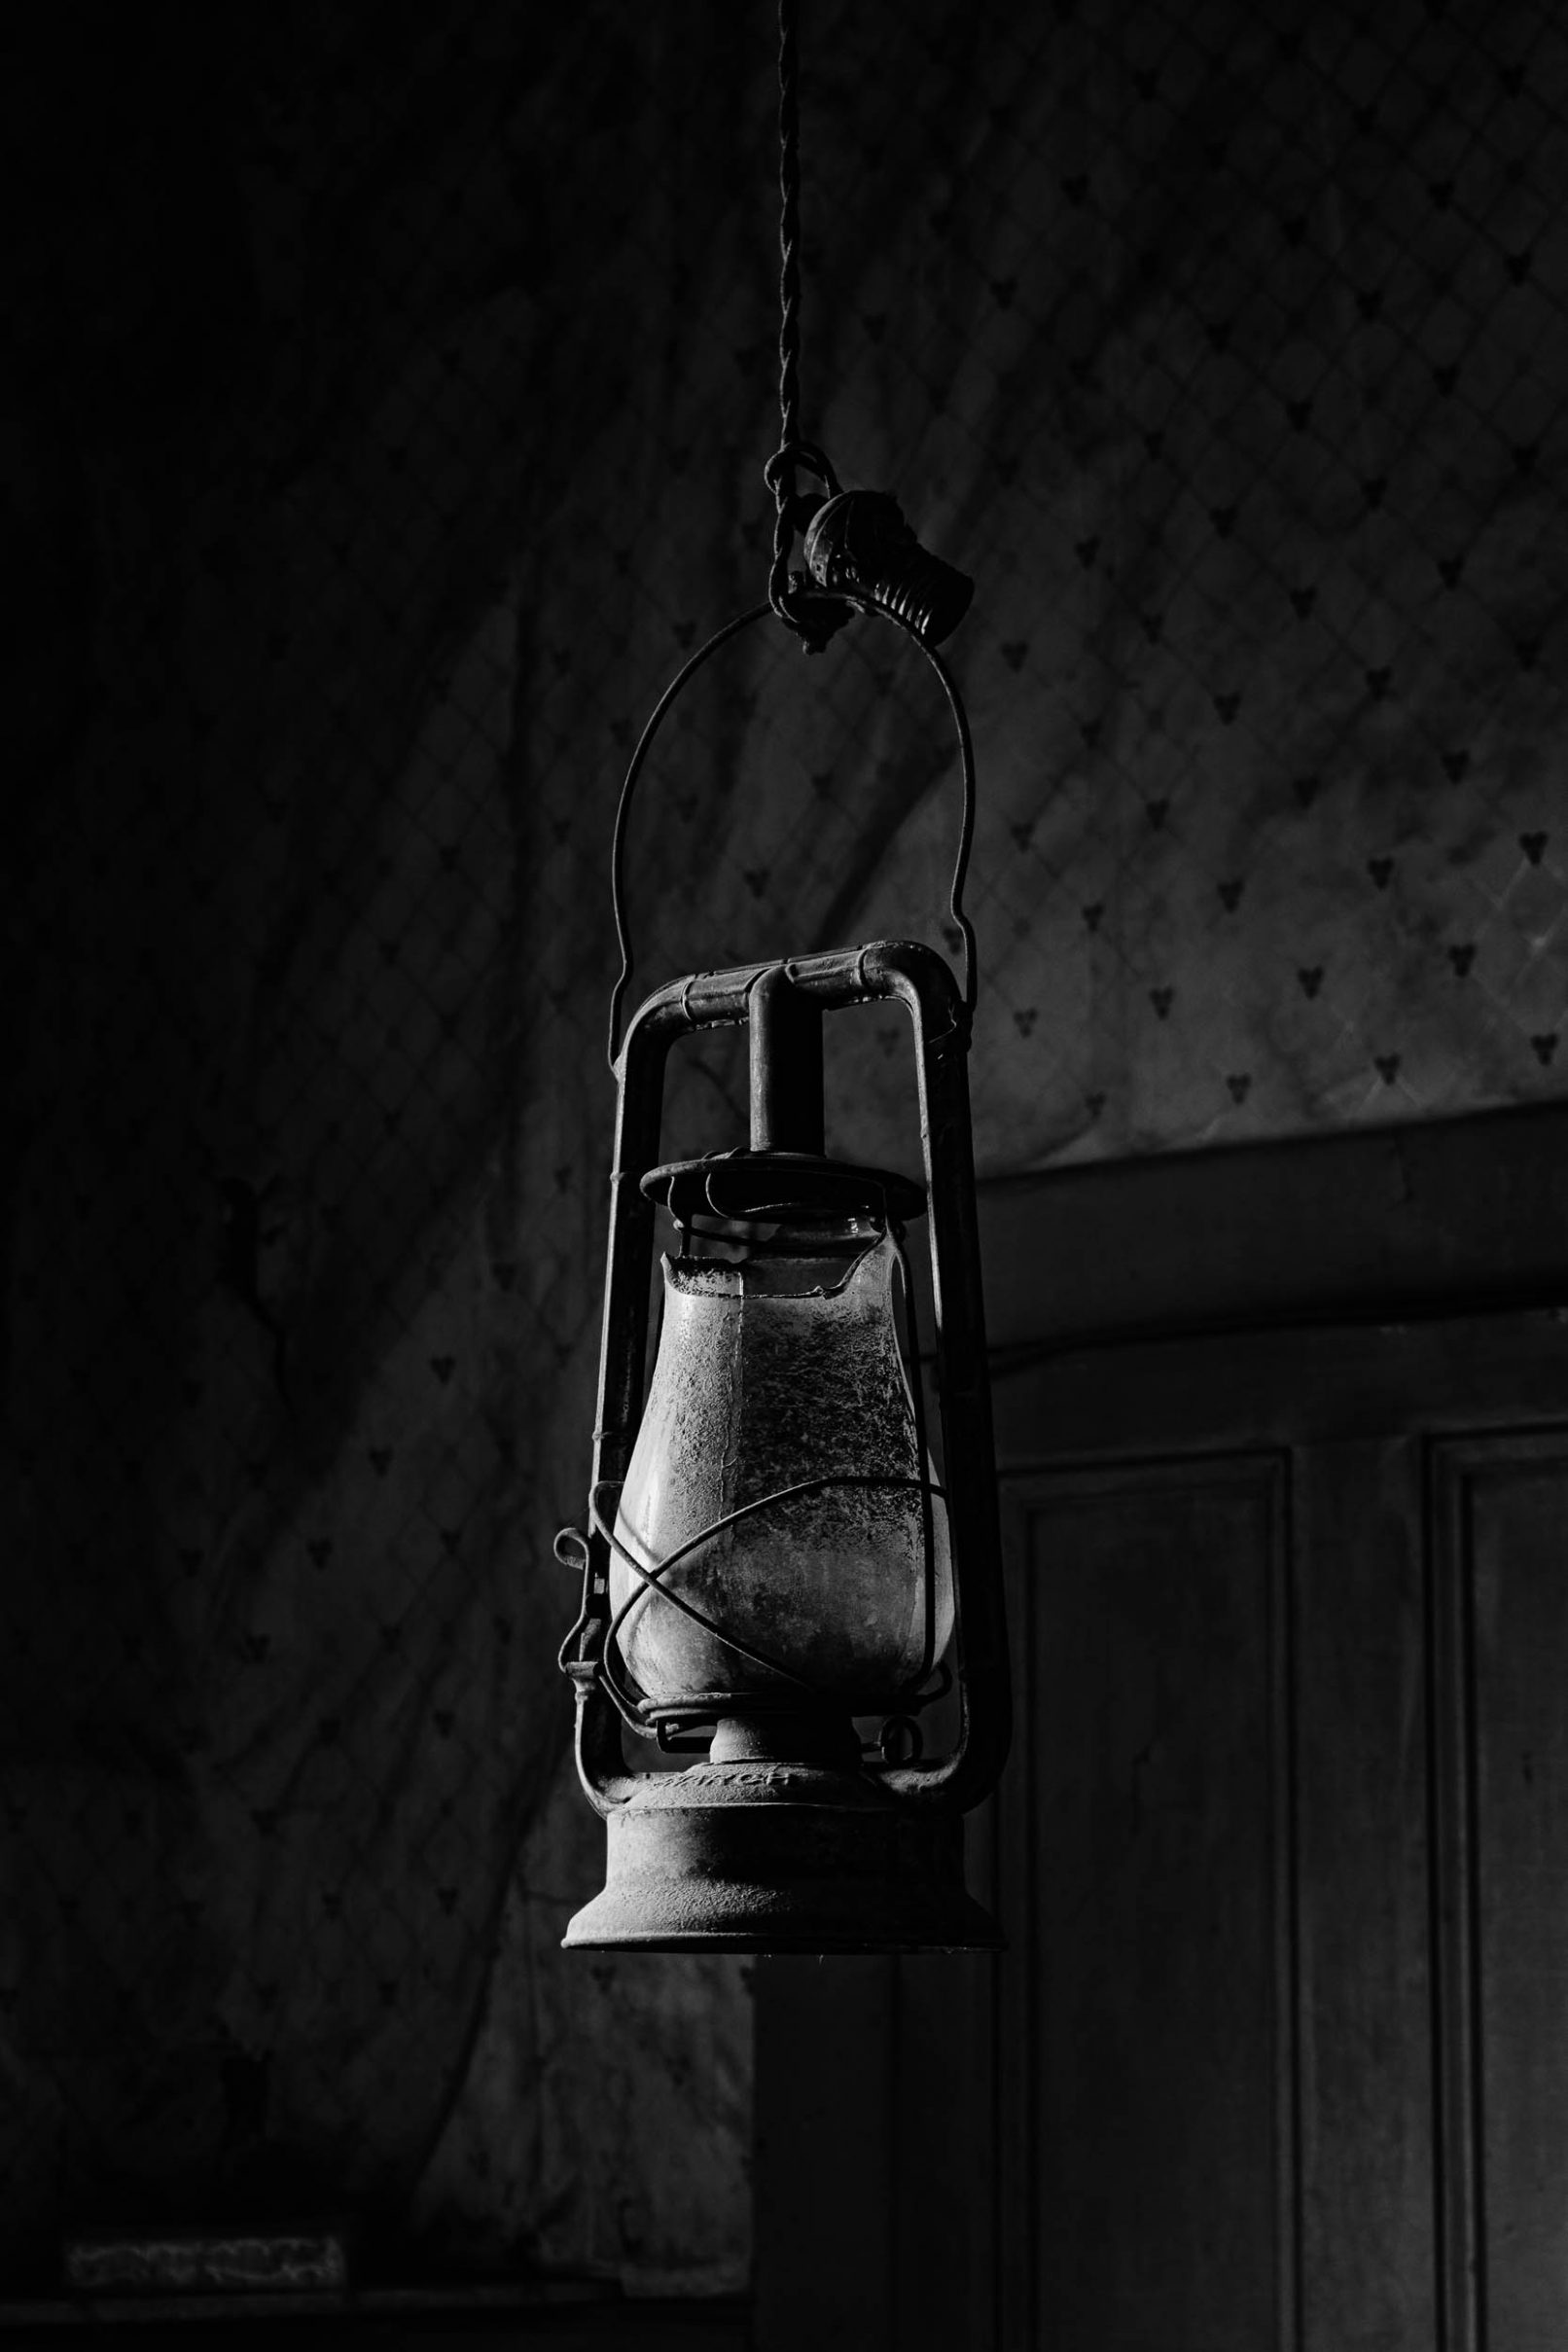 Hanging lantern in Bodi, California ghost town